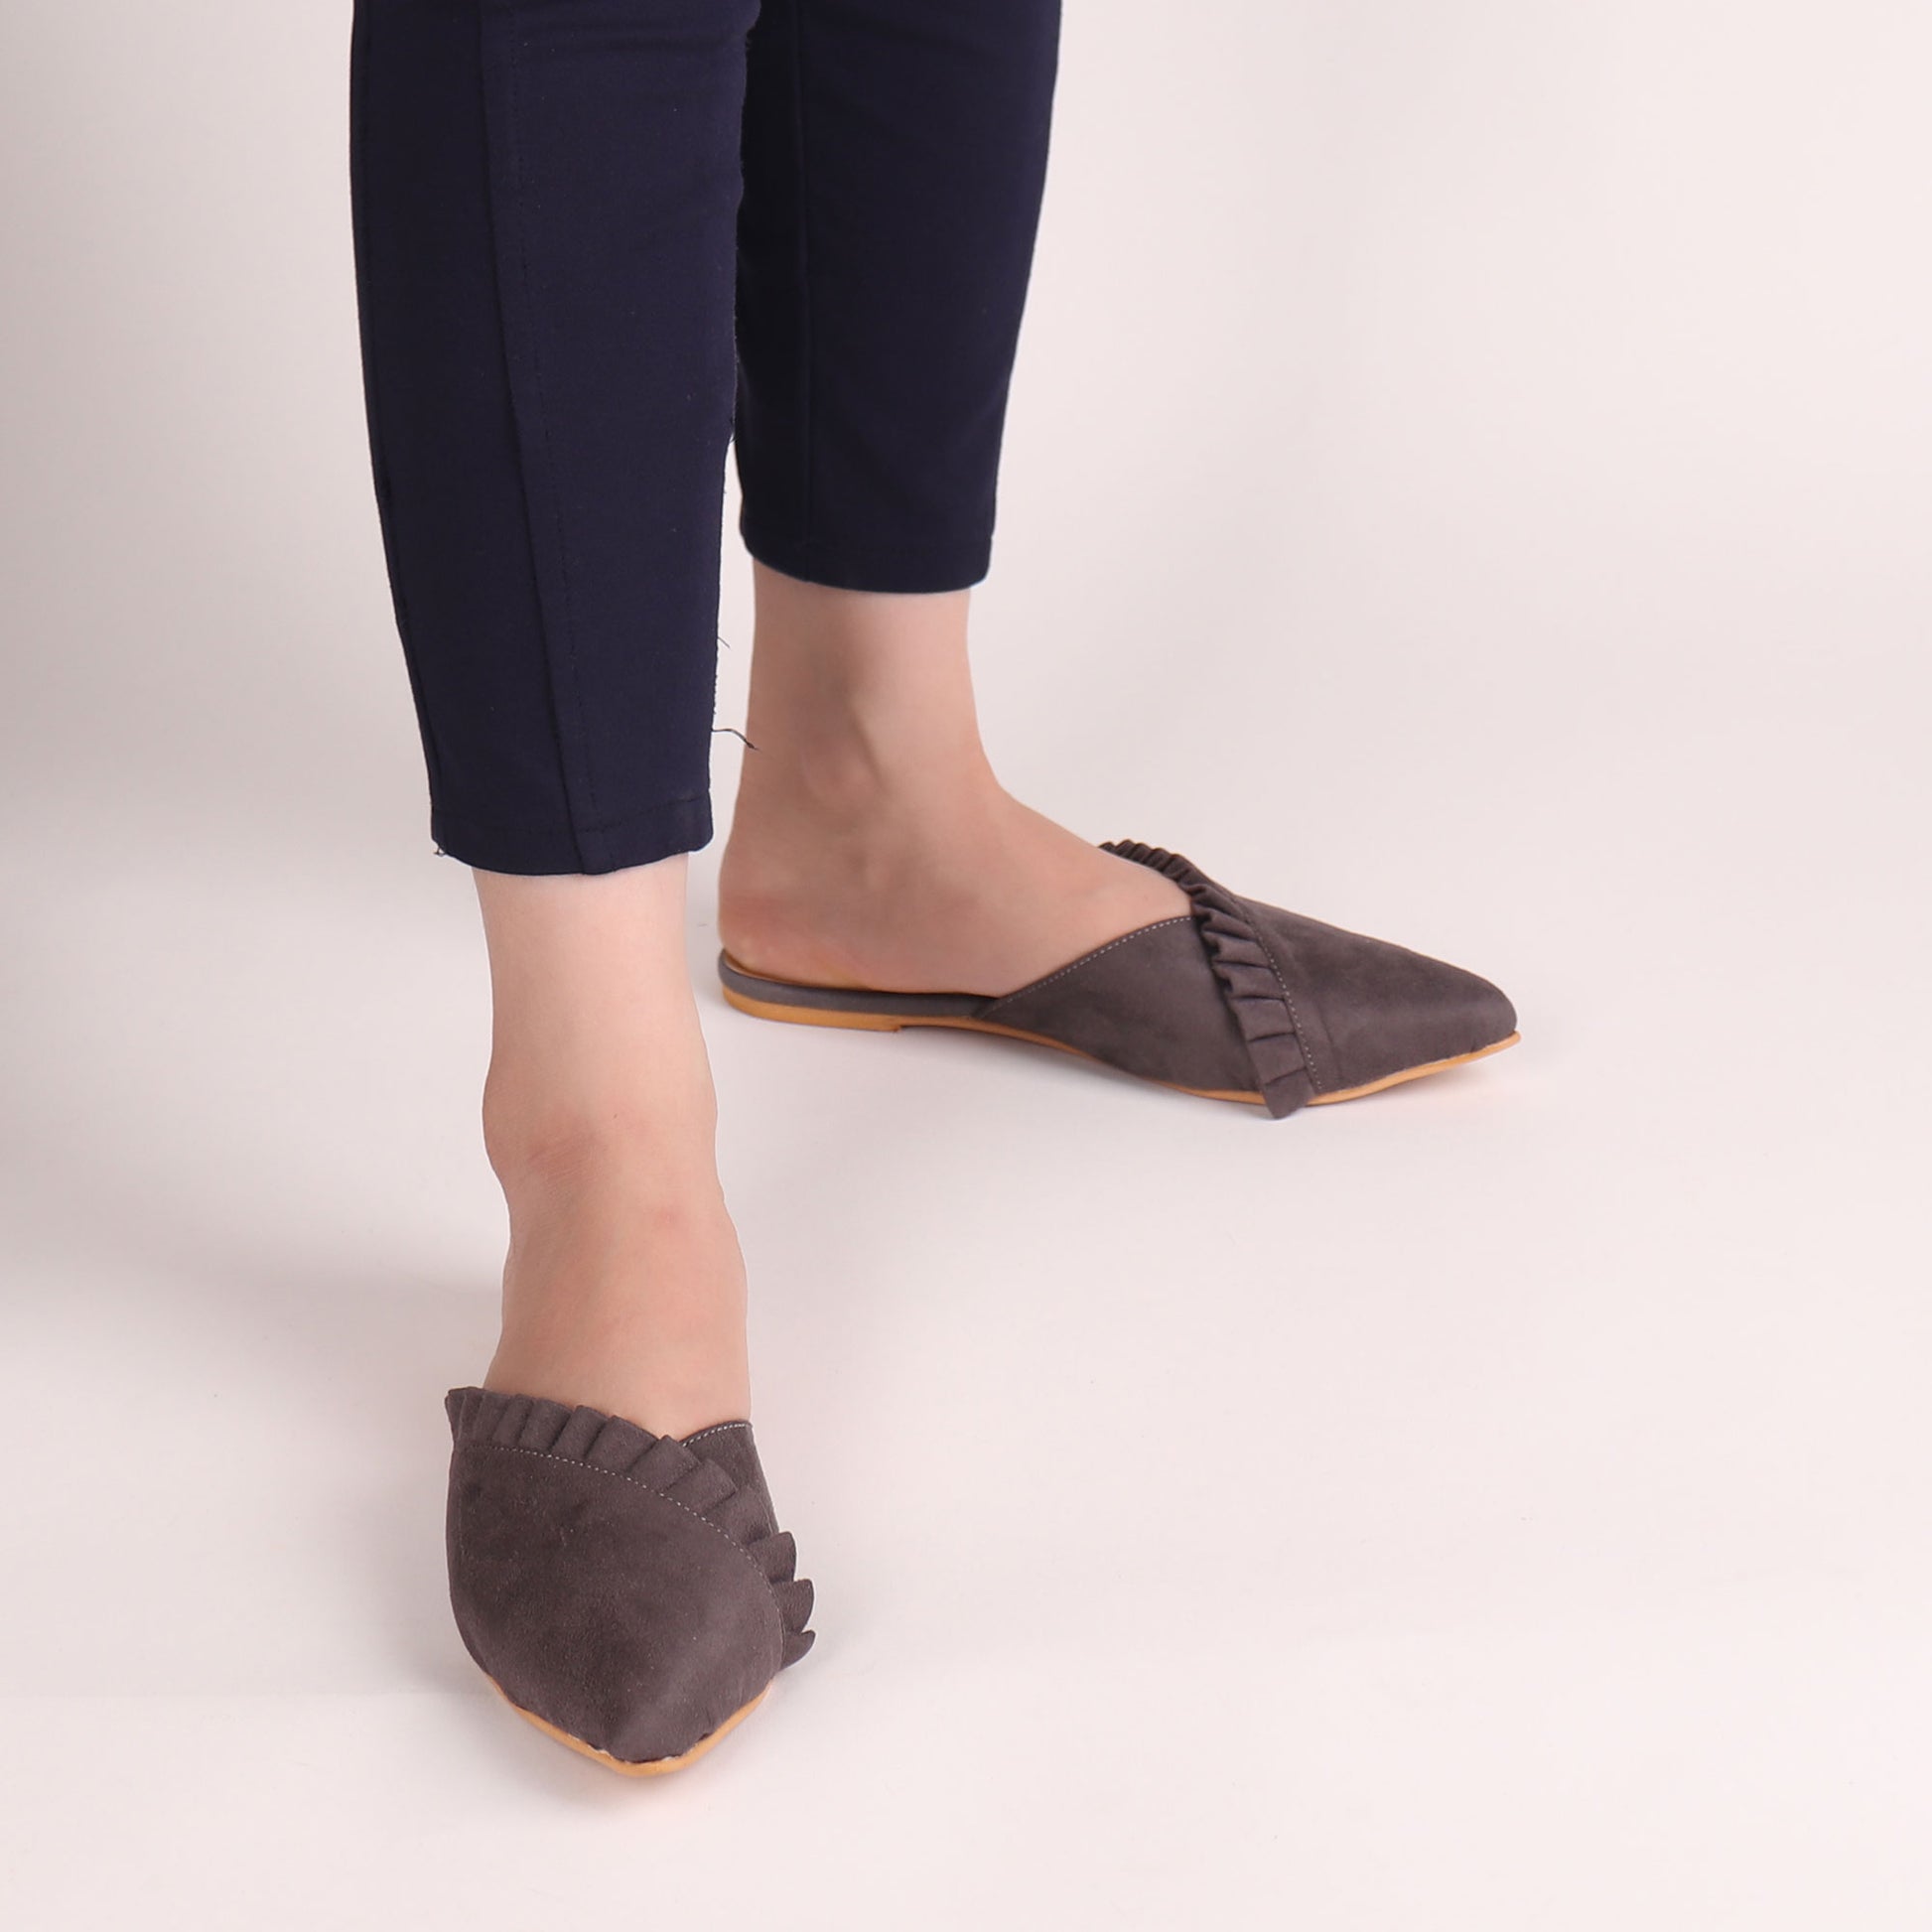 Foot Wear,The Suede Foliate Mule in Grey - Cippele Multi Store